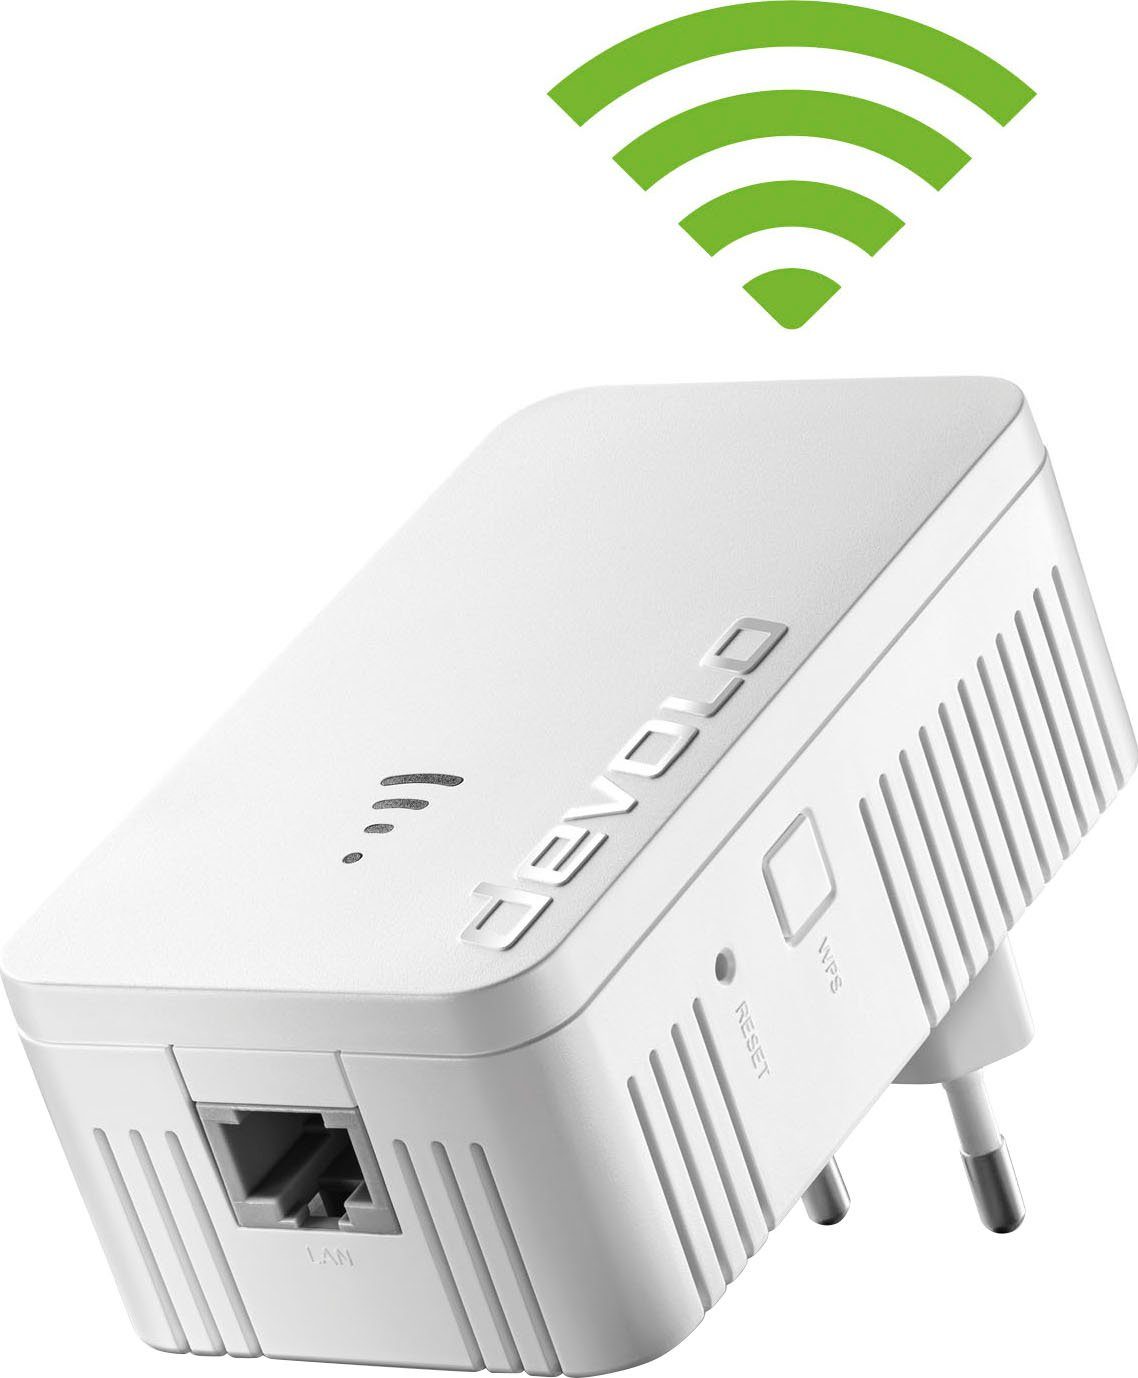 DEVOLO »WiFi 5 Repeater 1200 (Dual WLAN Verstärker, 1200 Mbit/s, LAN-Port,  Access Point)« WLAN-Router online kaufen | OTTO